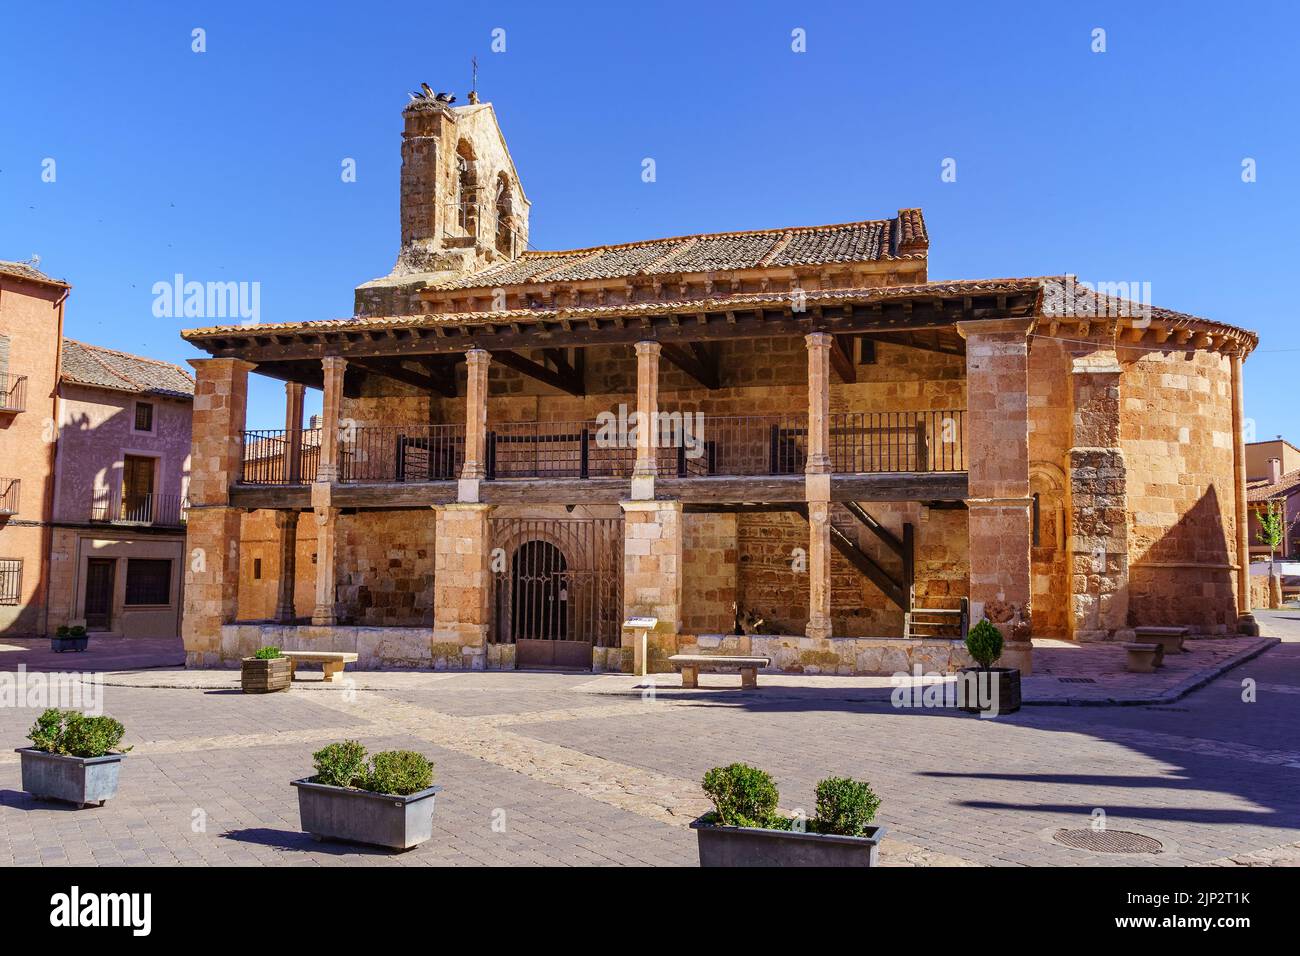 Old Church in the town square. Ayllon, Segovia, Spain. Stock Photo